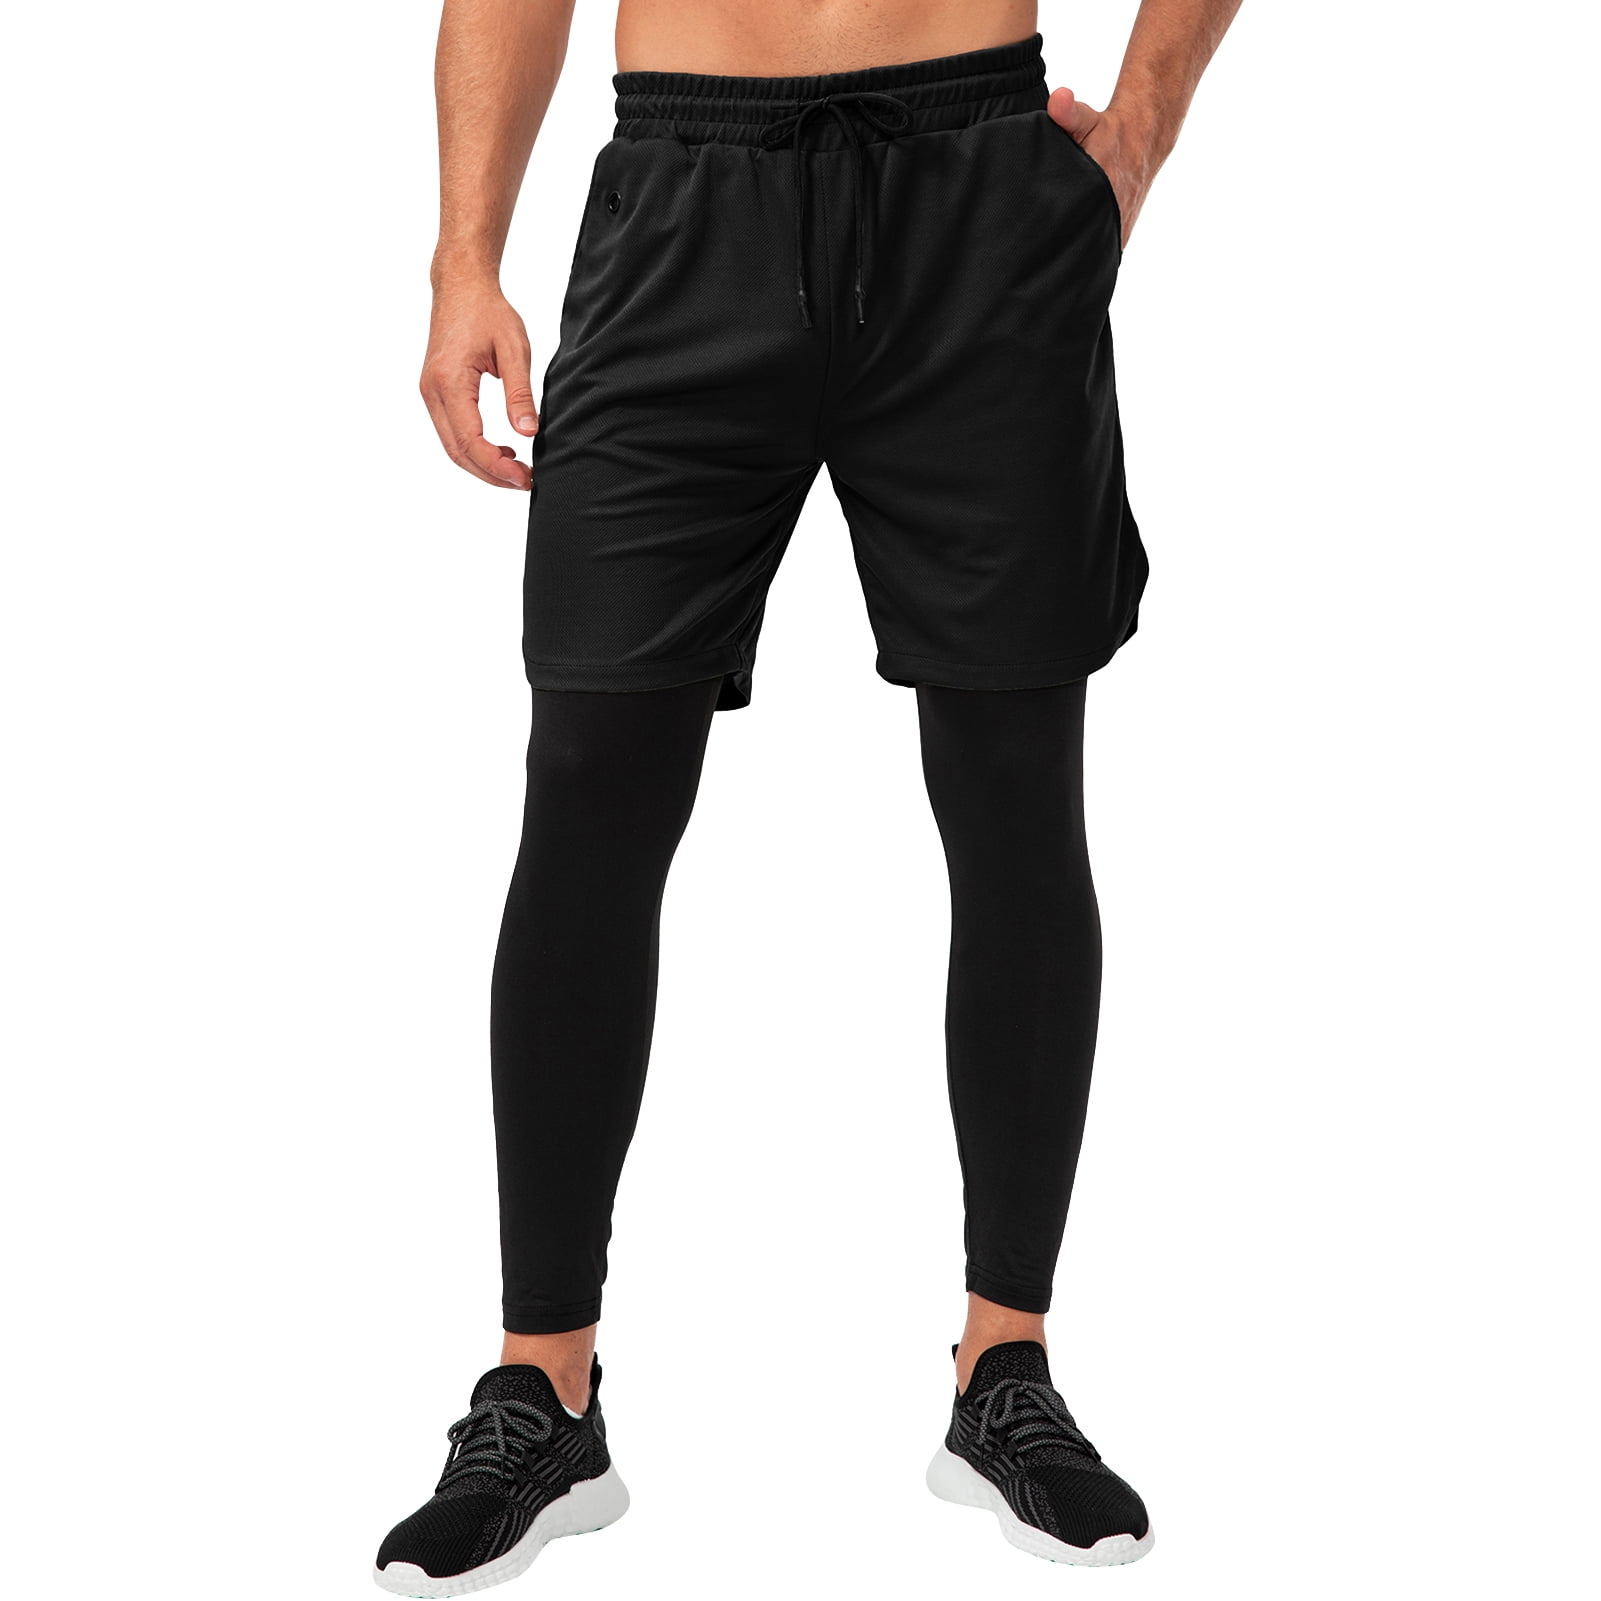 Men Sport Pants with Pockets 2-in-1 Liner Leggings Athletic Shorts